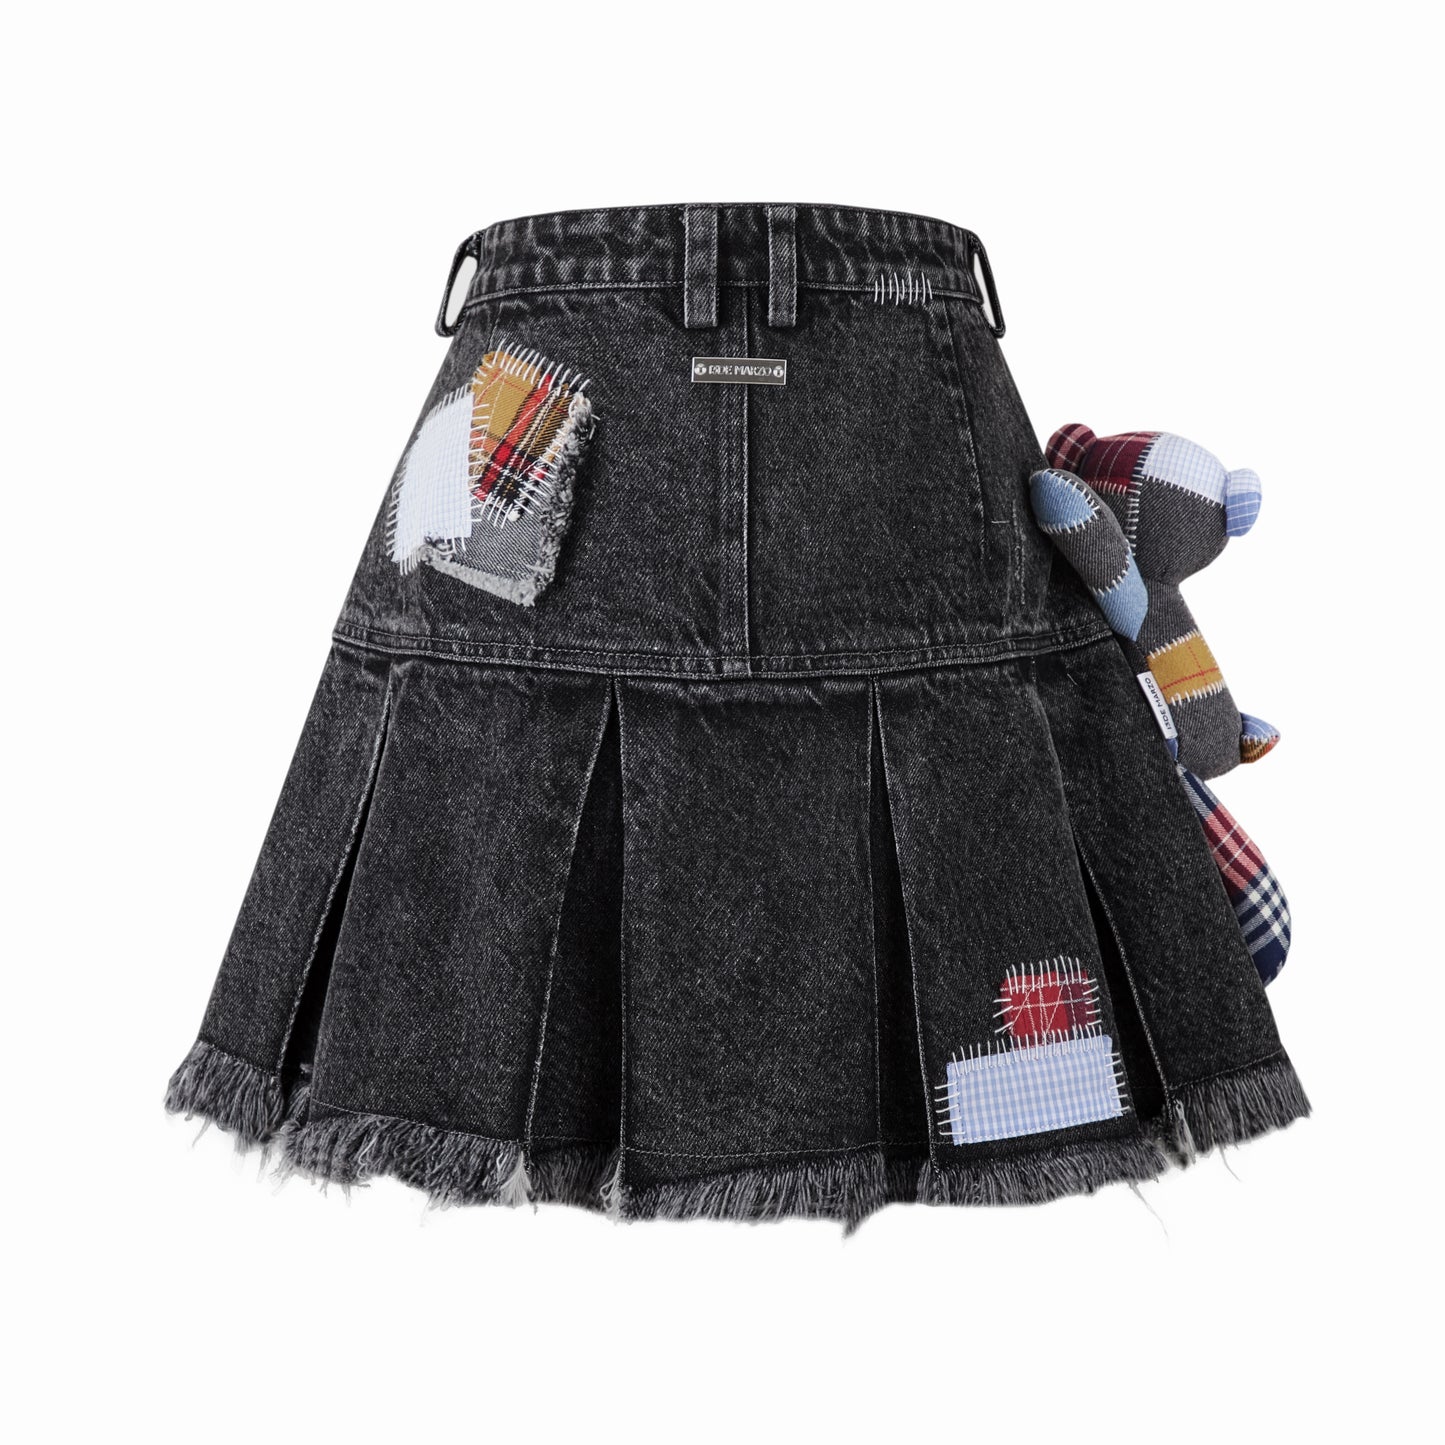 13DE MARZO Bear Patch Suture Denim Skirt